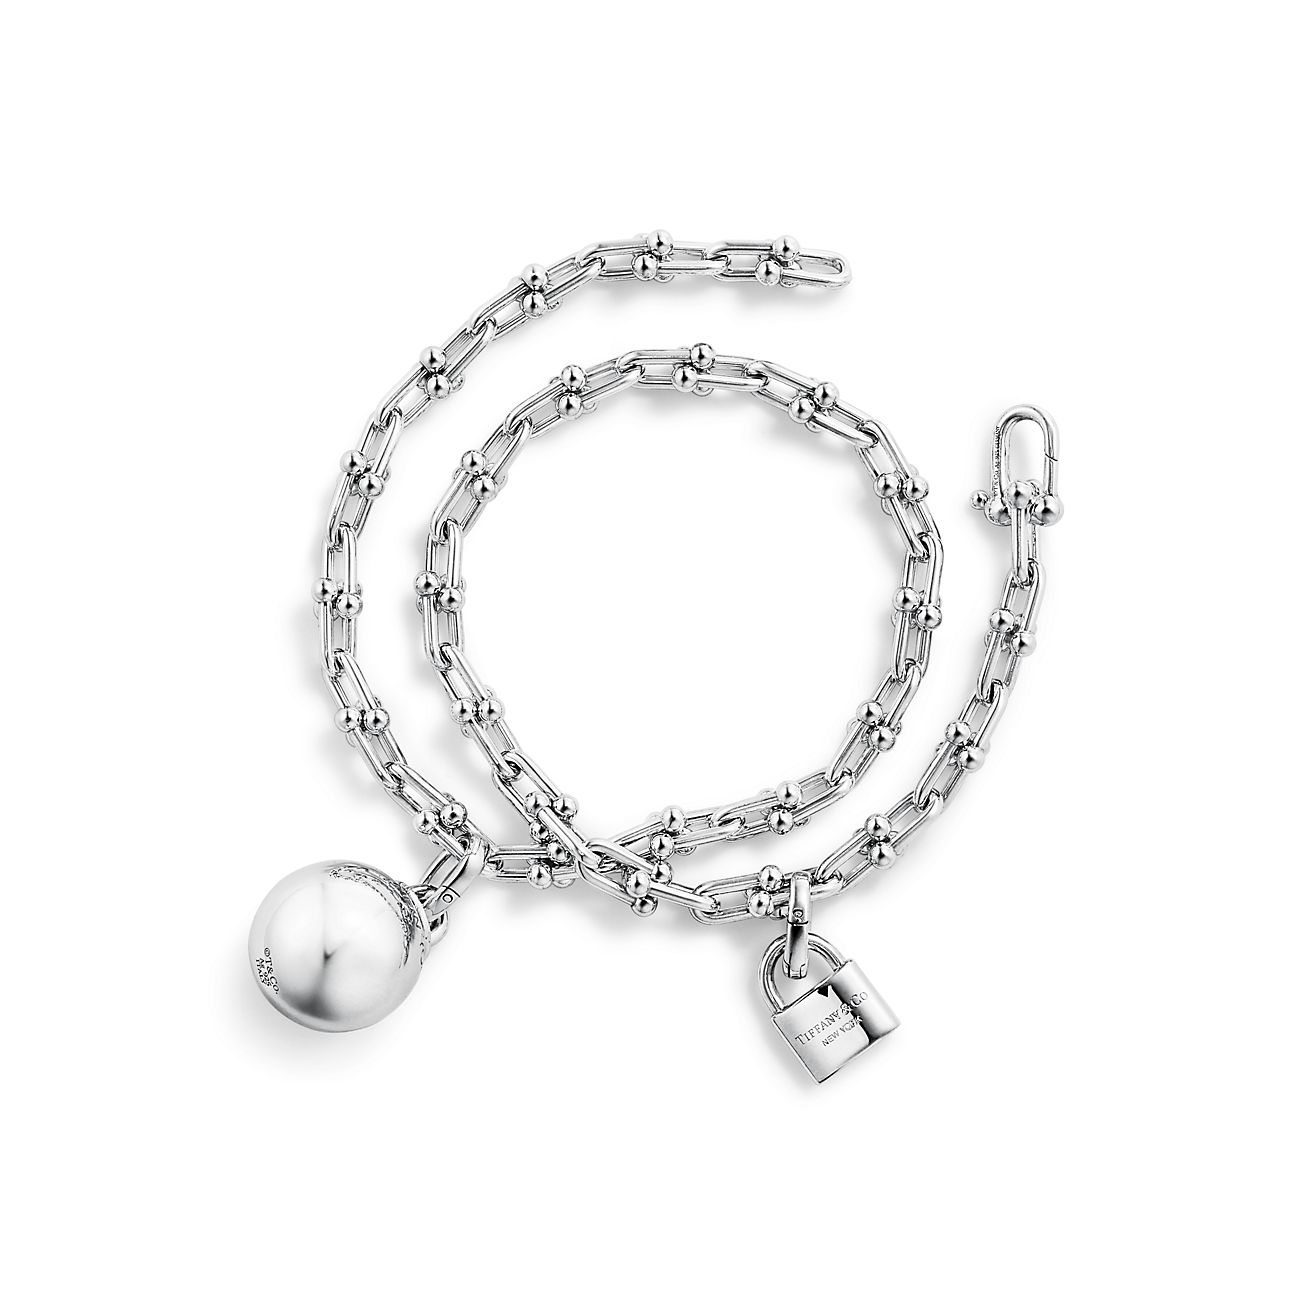 Authentic Tiffany & Co. Hardware wrap Bracelet #260-004-727-8721